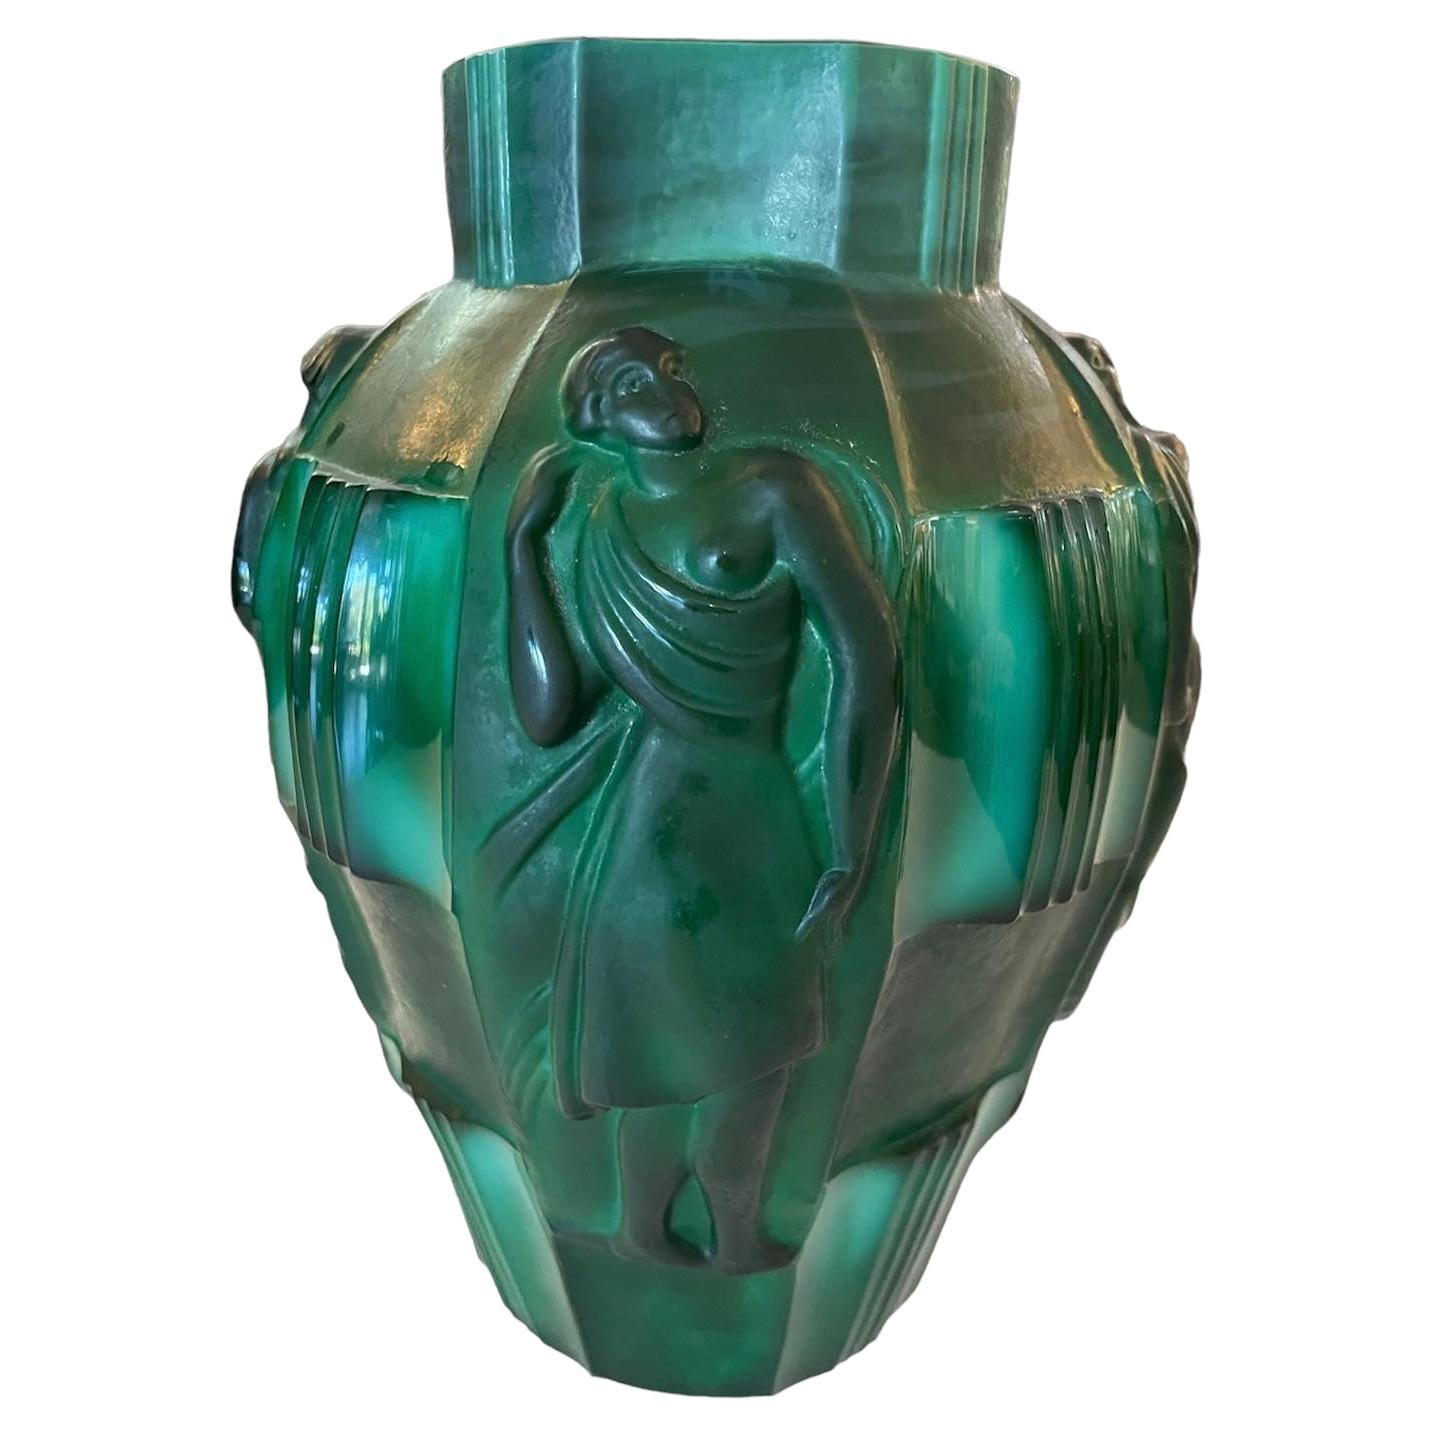 Artur Pleva Curt Schlevogt Art Deco, Malachite Glass Vase